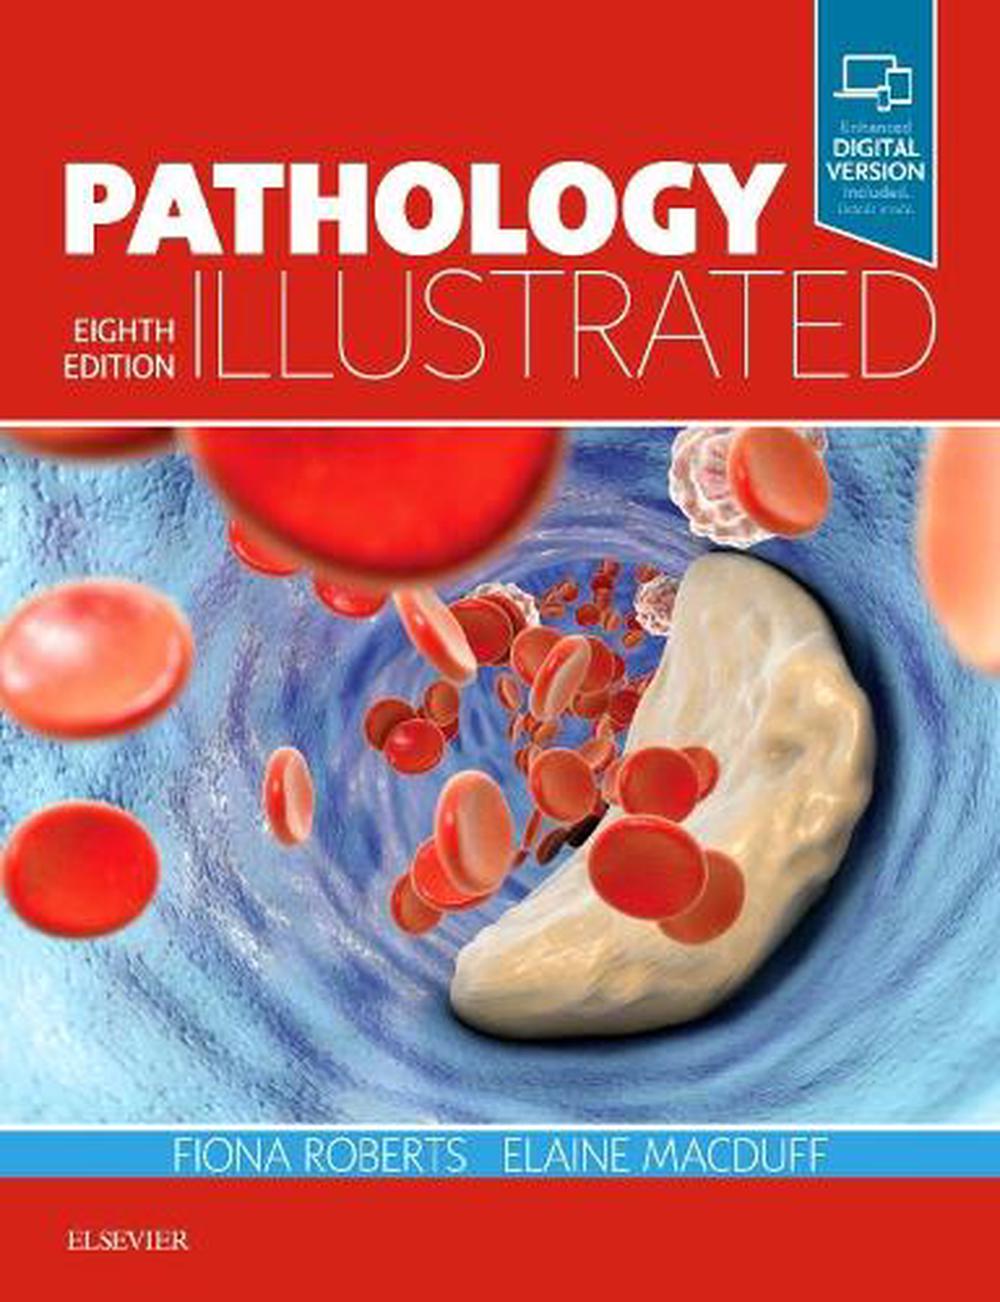 pathology illustrated robin reid pdf free download